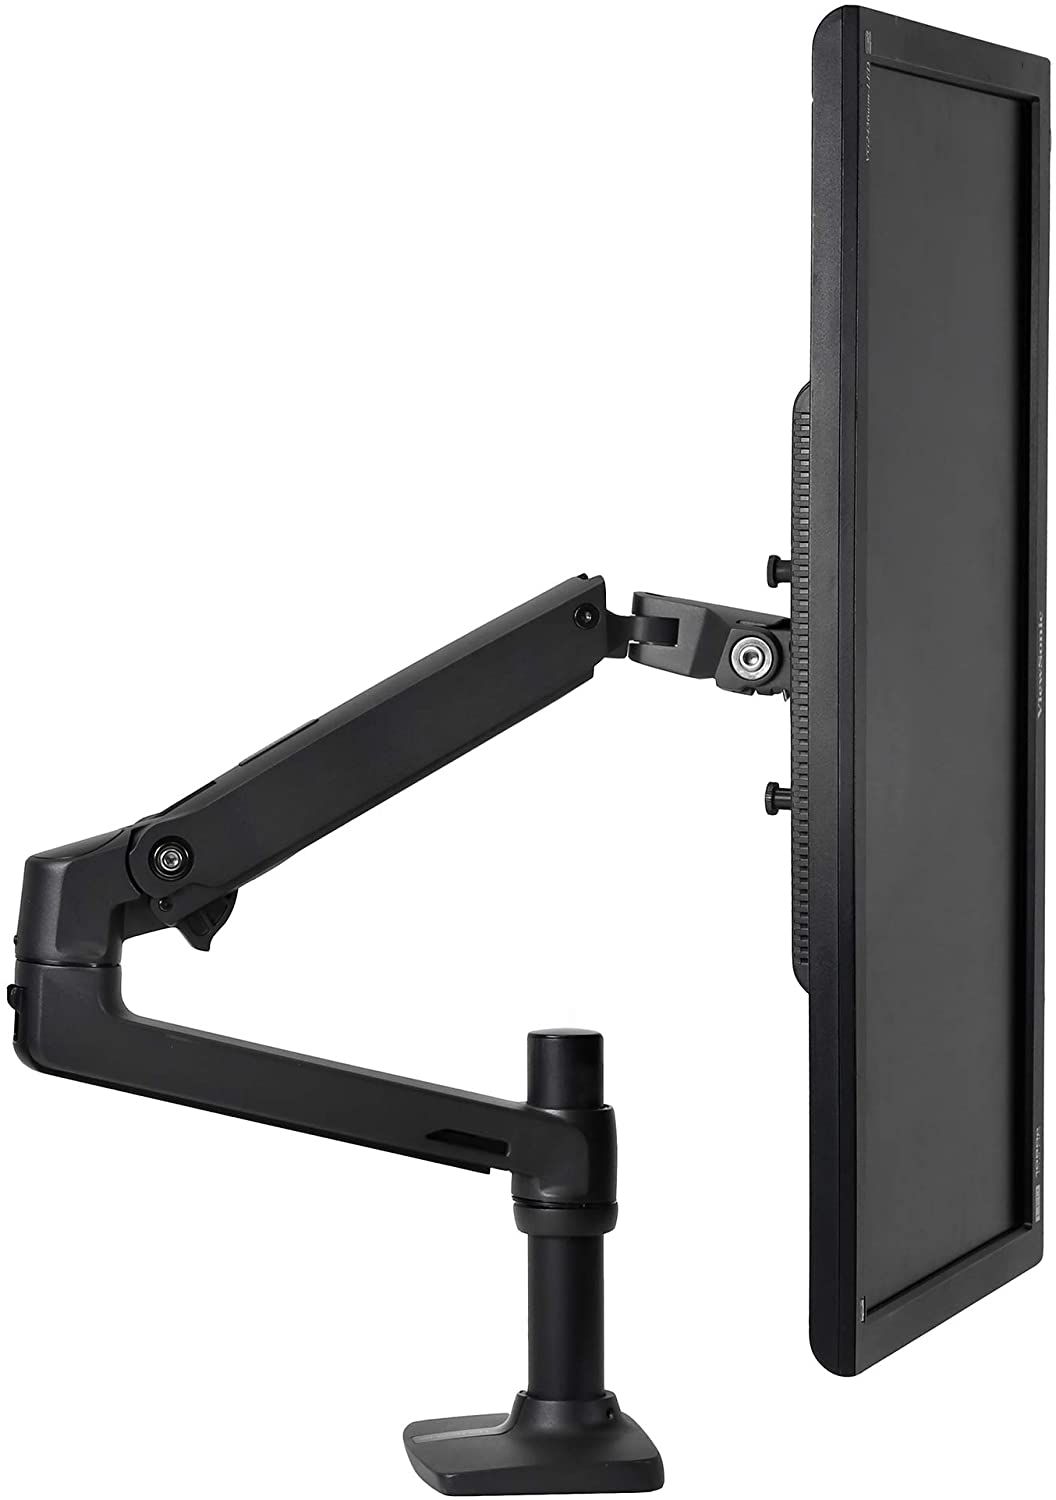 Ergotron LX Tall Desk Mount Monitor Arm side view